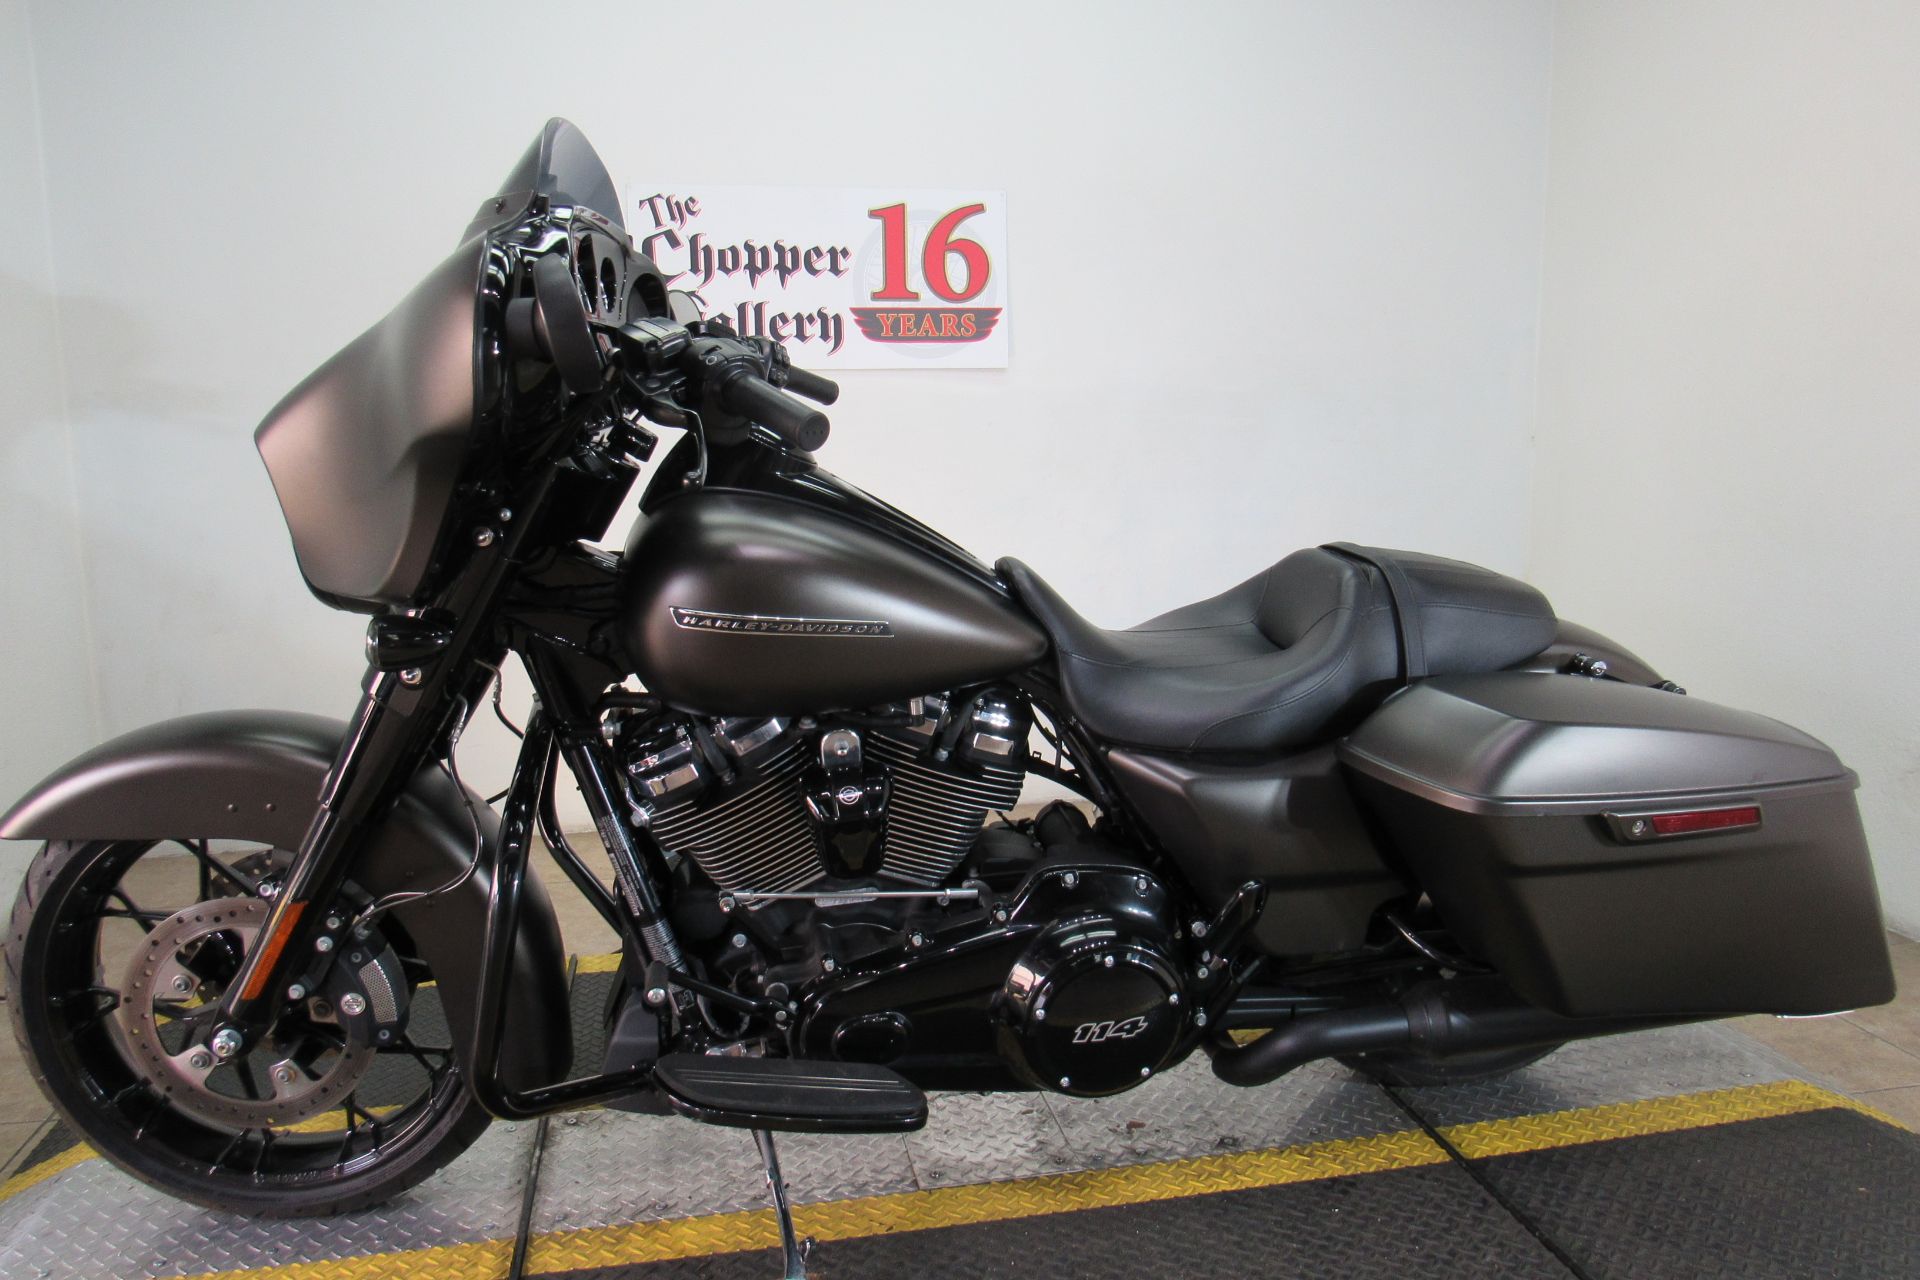 2020 Harley-Davidson Street Glide® Special in Temecula, California - Photo 4